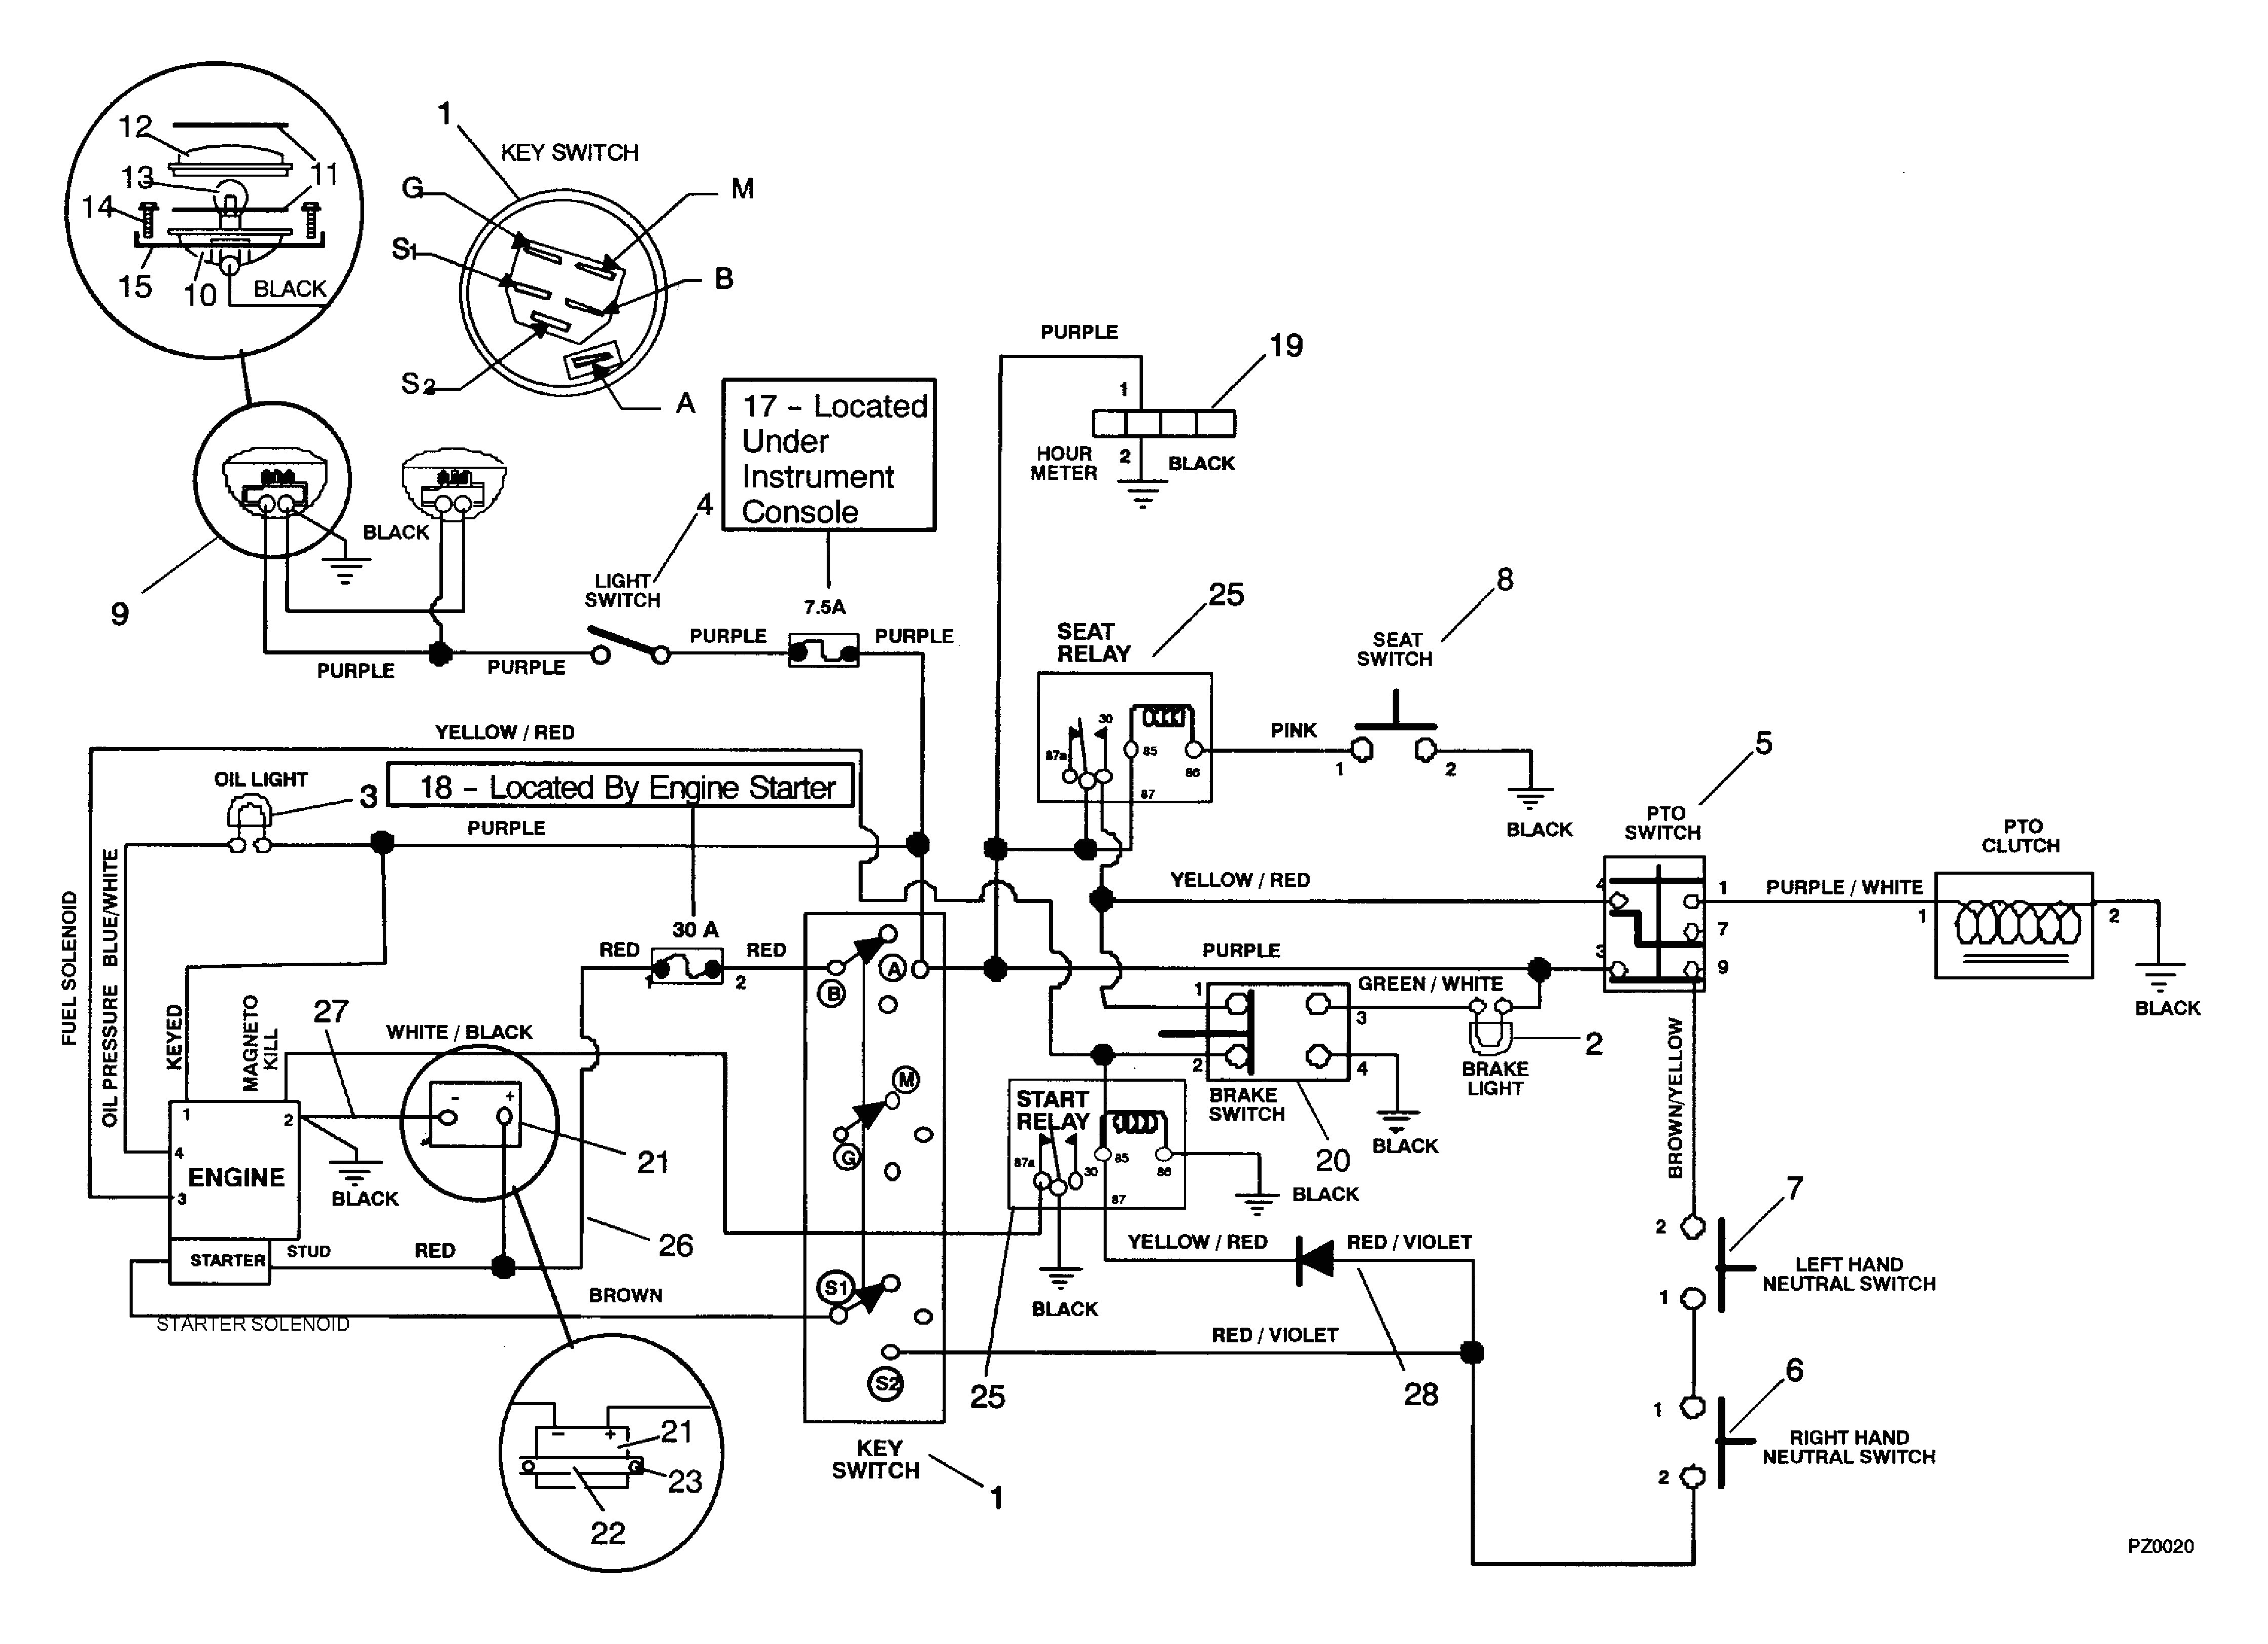 20 hp kohler engine wiring diagram rate kohler courage 19 diagram circuit wiring and diagram hub e280a2 of 20 hp kohler engine wiring diagram jpg